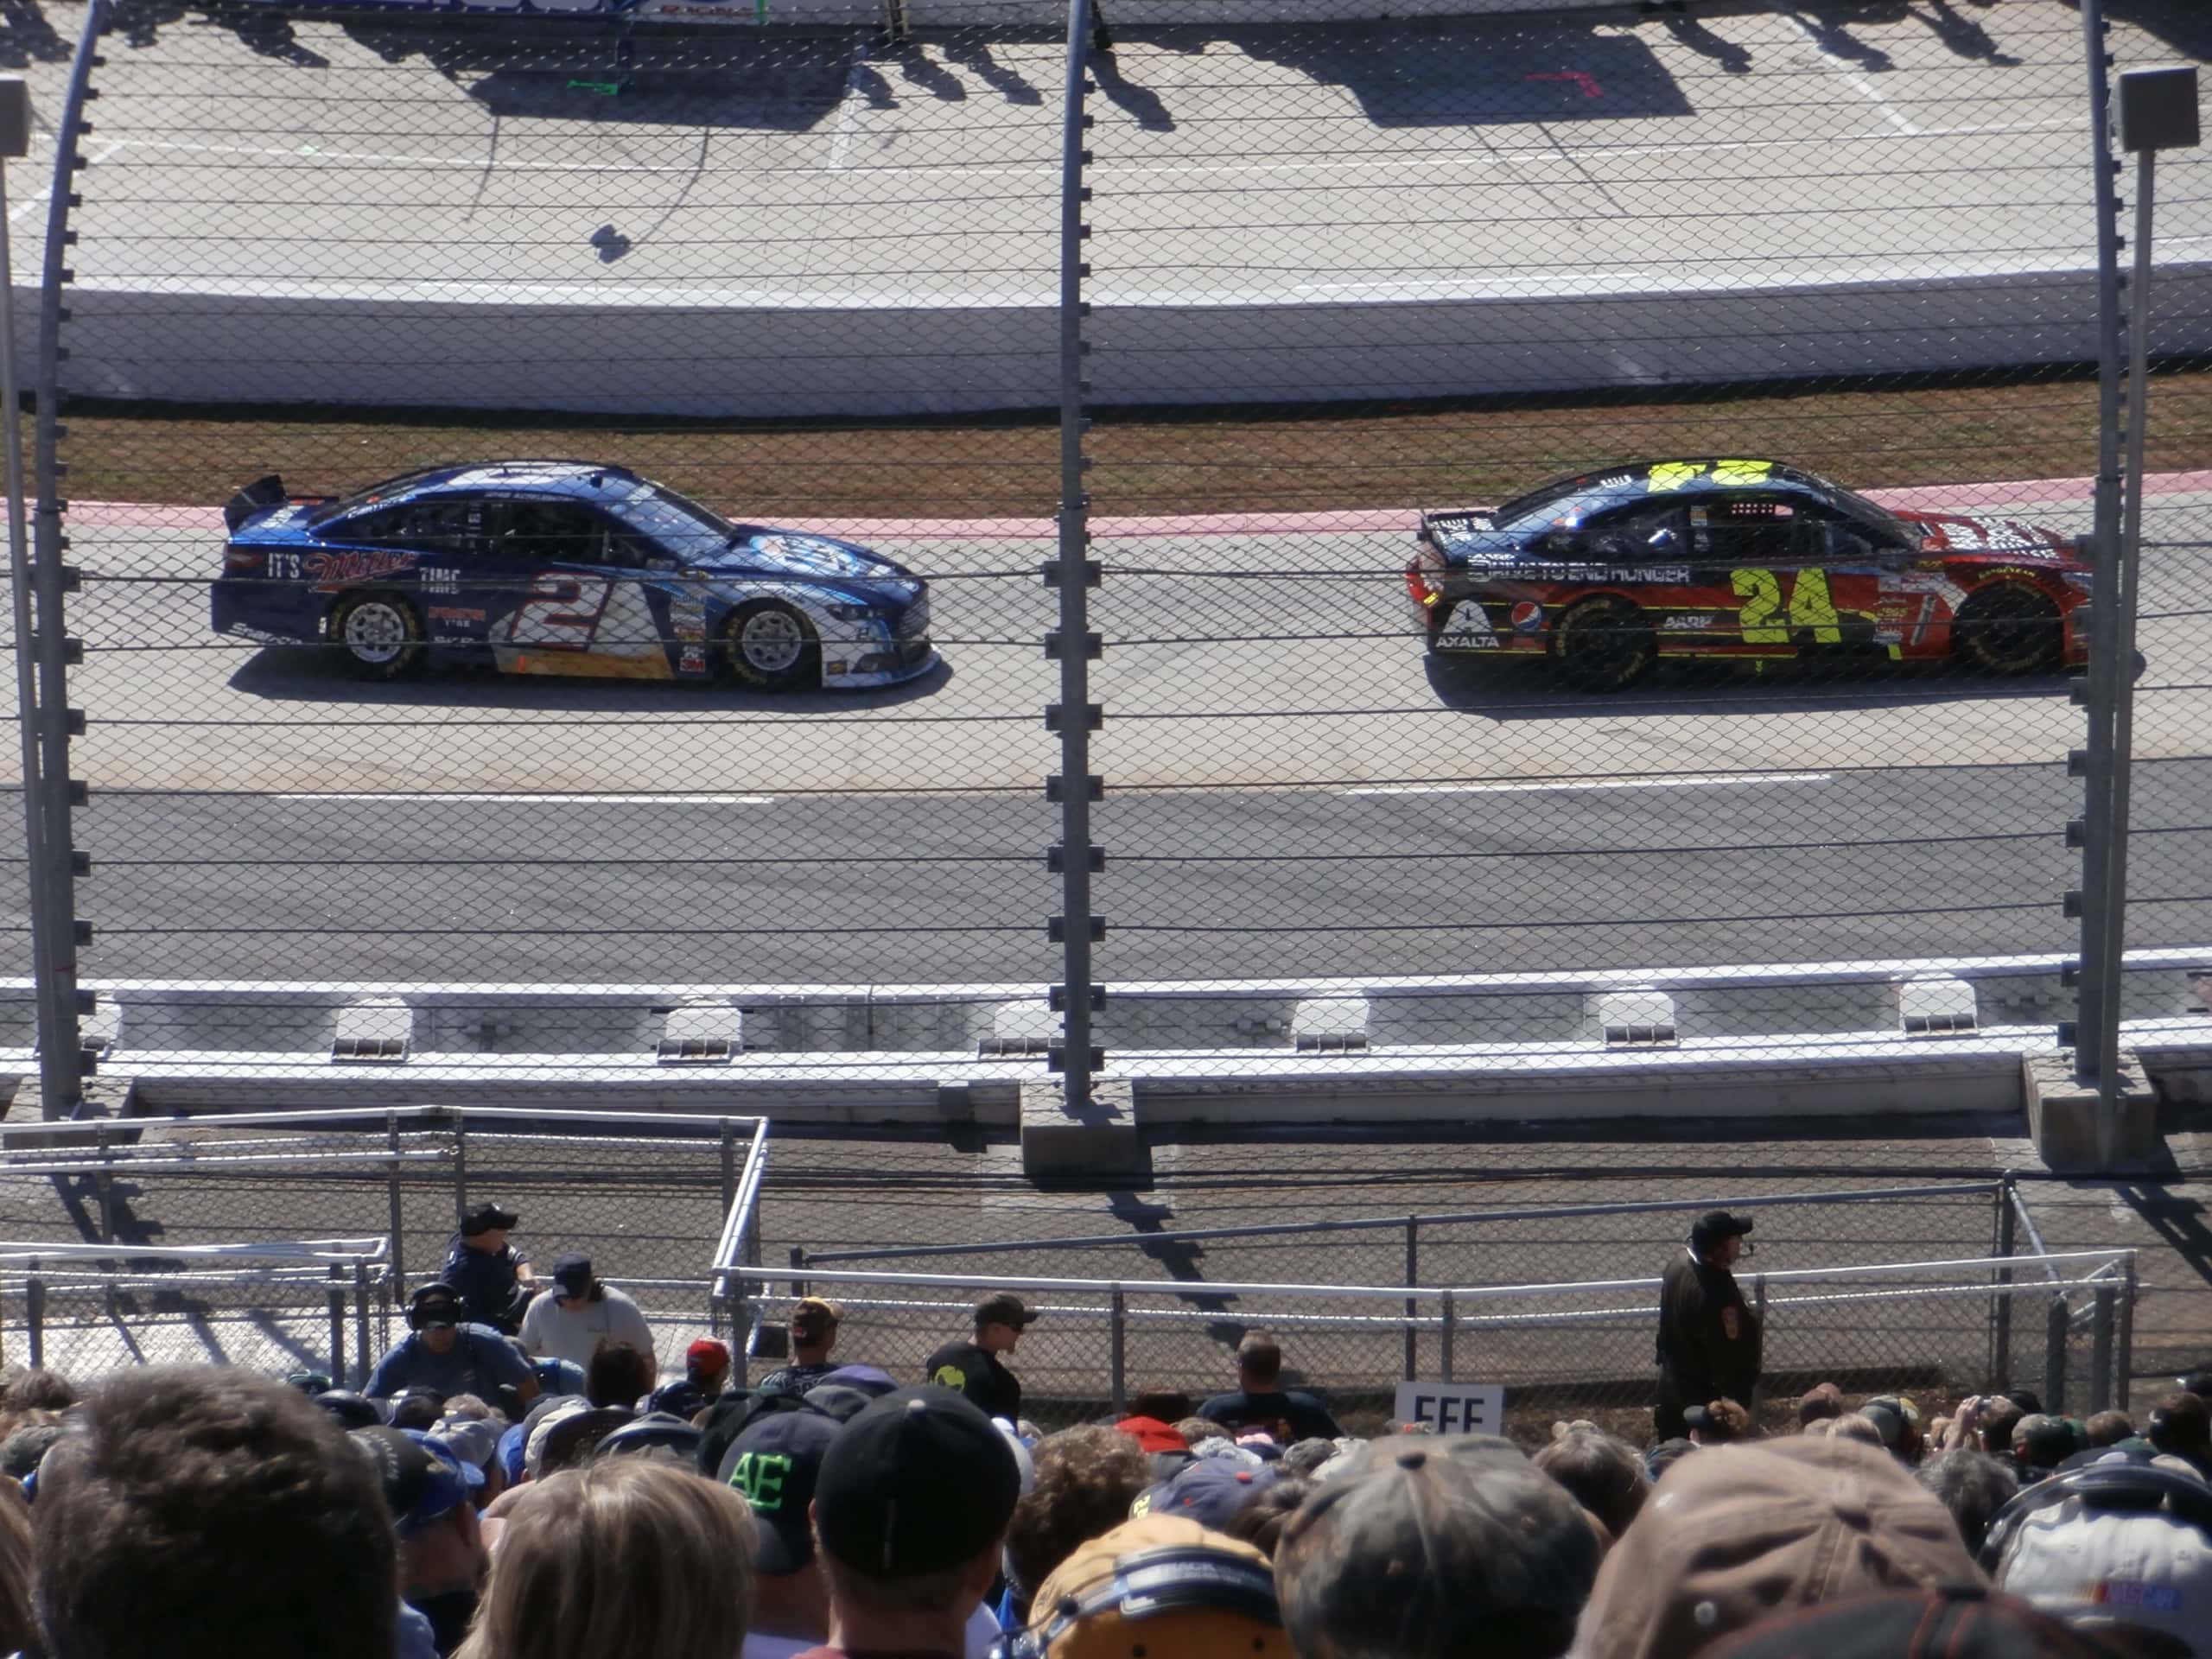 NASCAR's Martinville Race - October 2013 - Jeff Gordon (24) leading